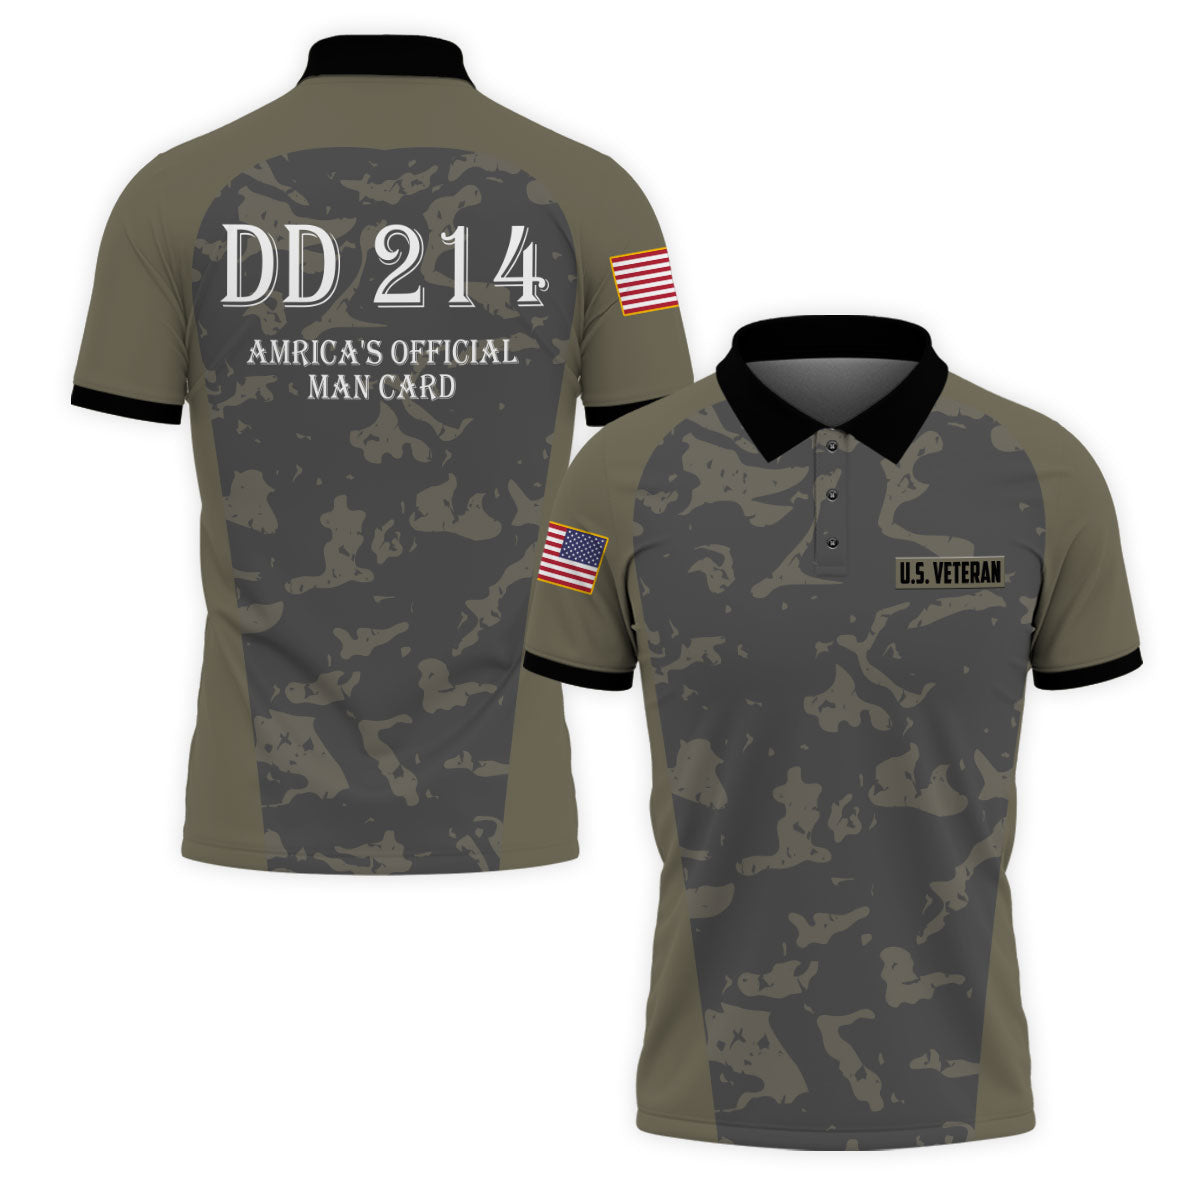 DD-214 America‘s Official Man Card Shirt